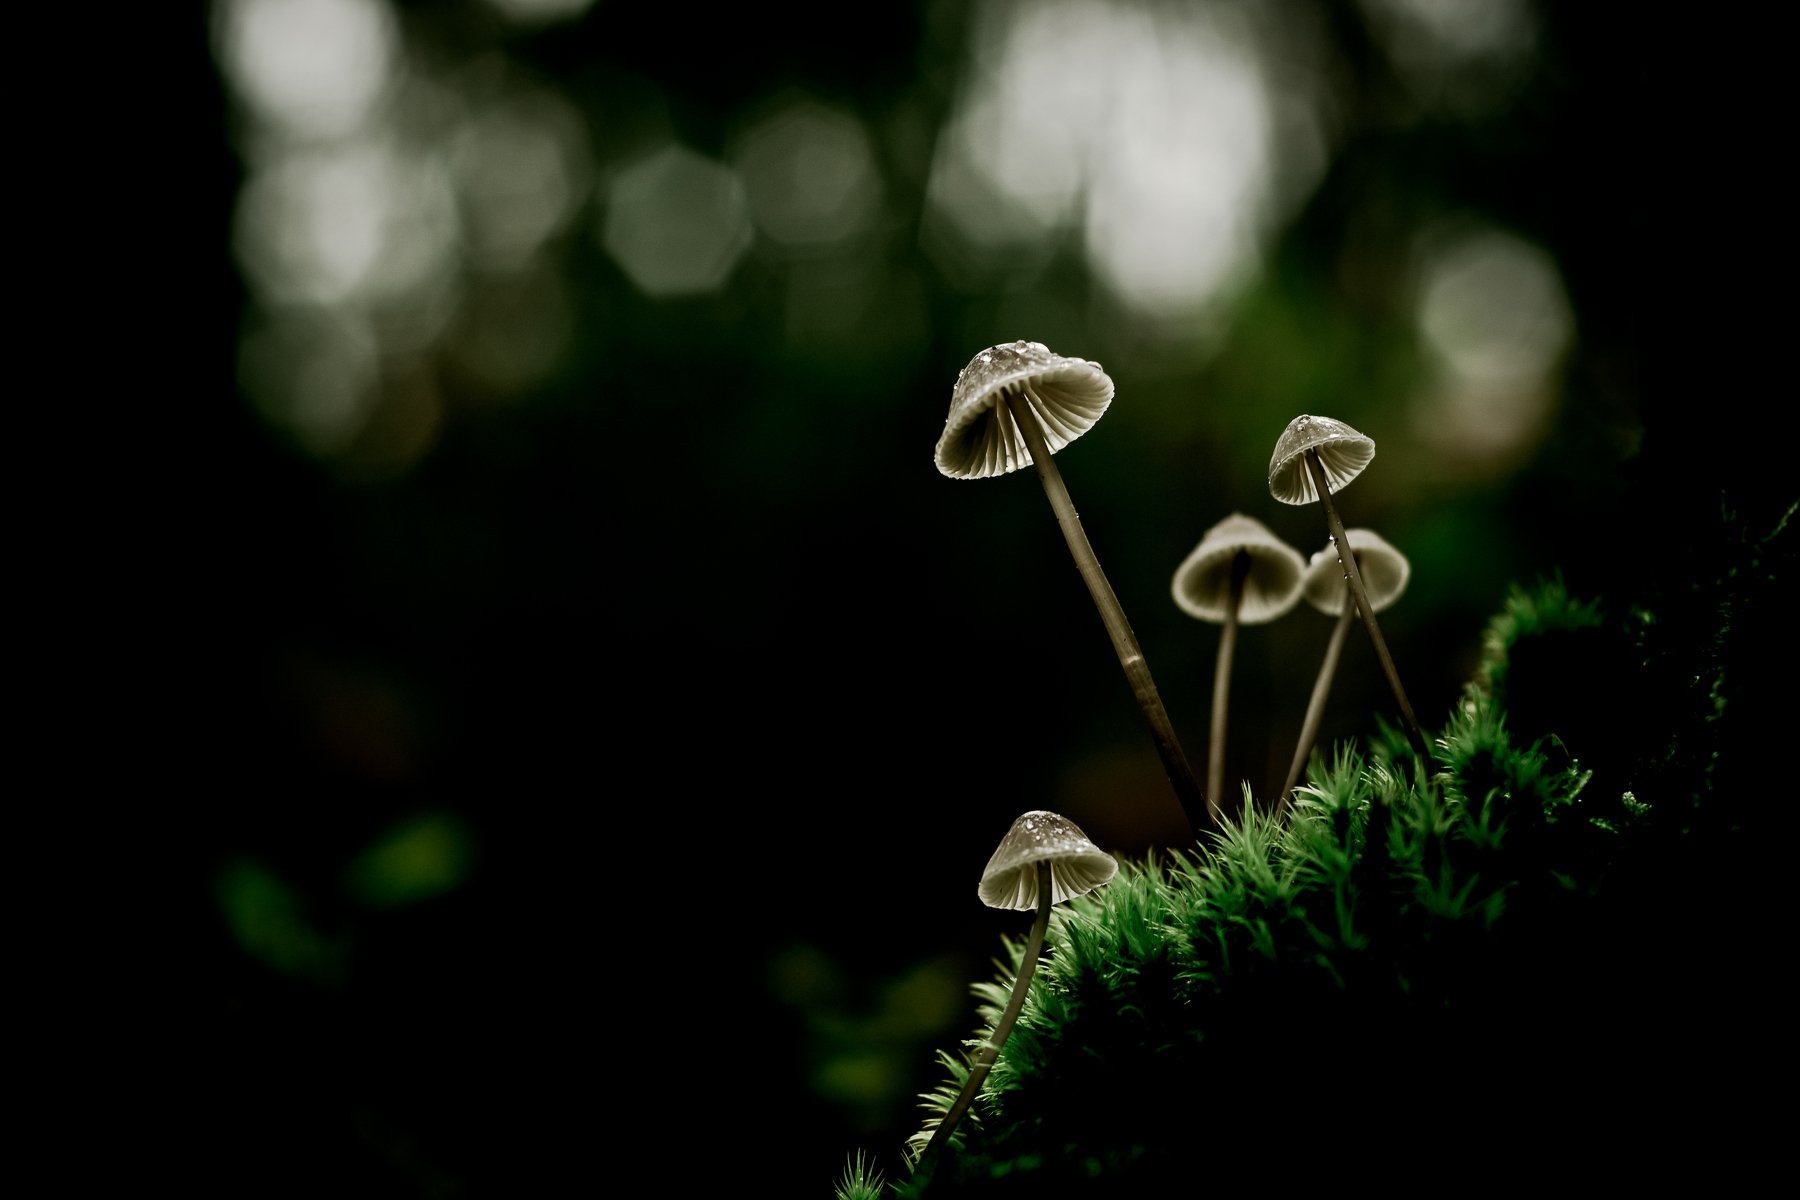 fungi, fungus, mushroom, green, moods, nature, natural, macro, close-up, Antonio Coelho